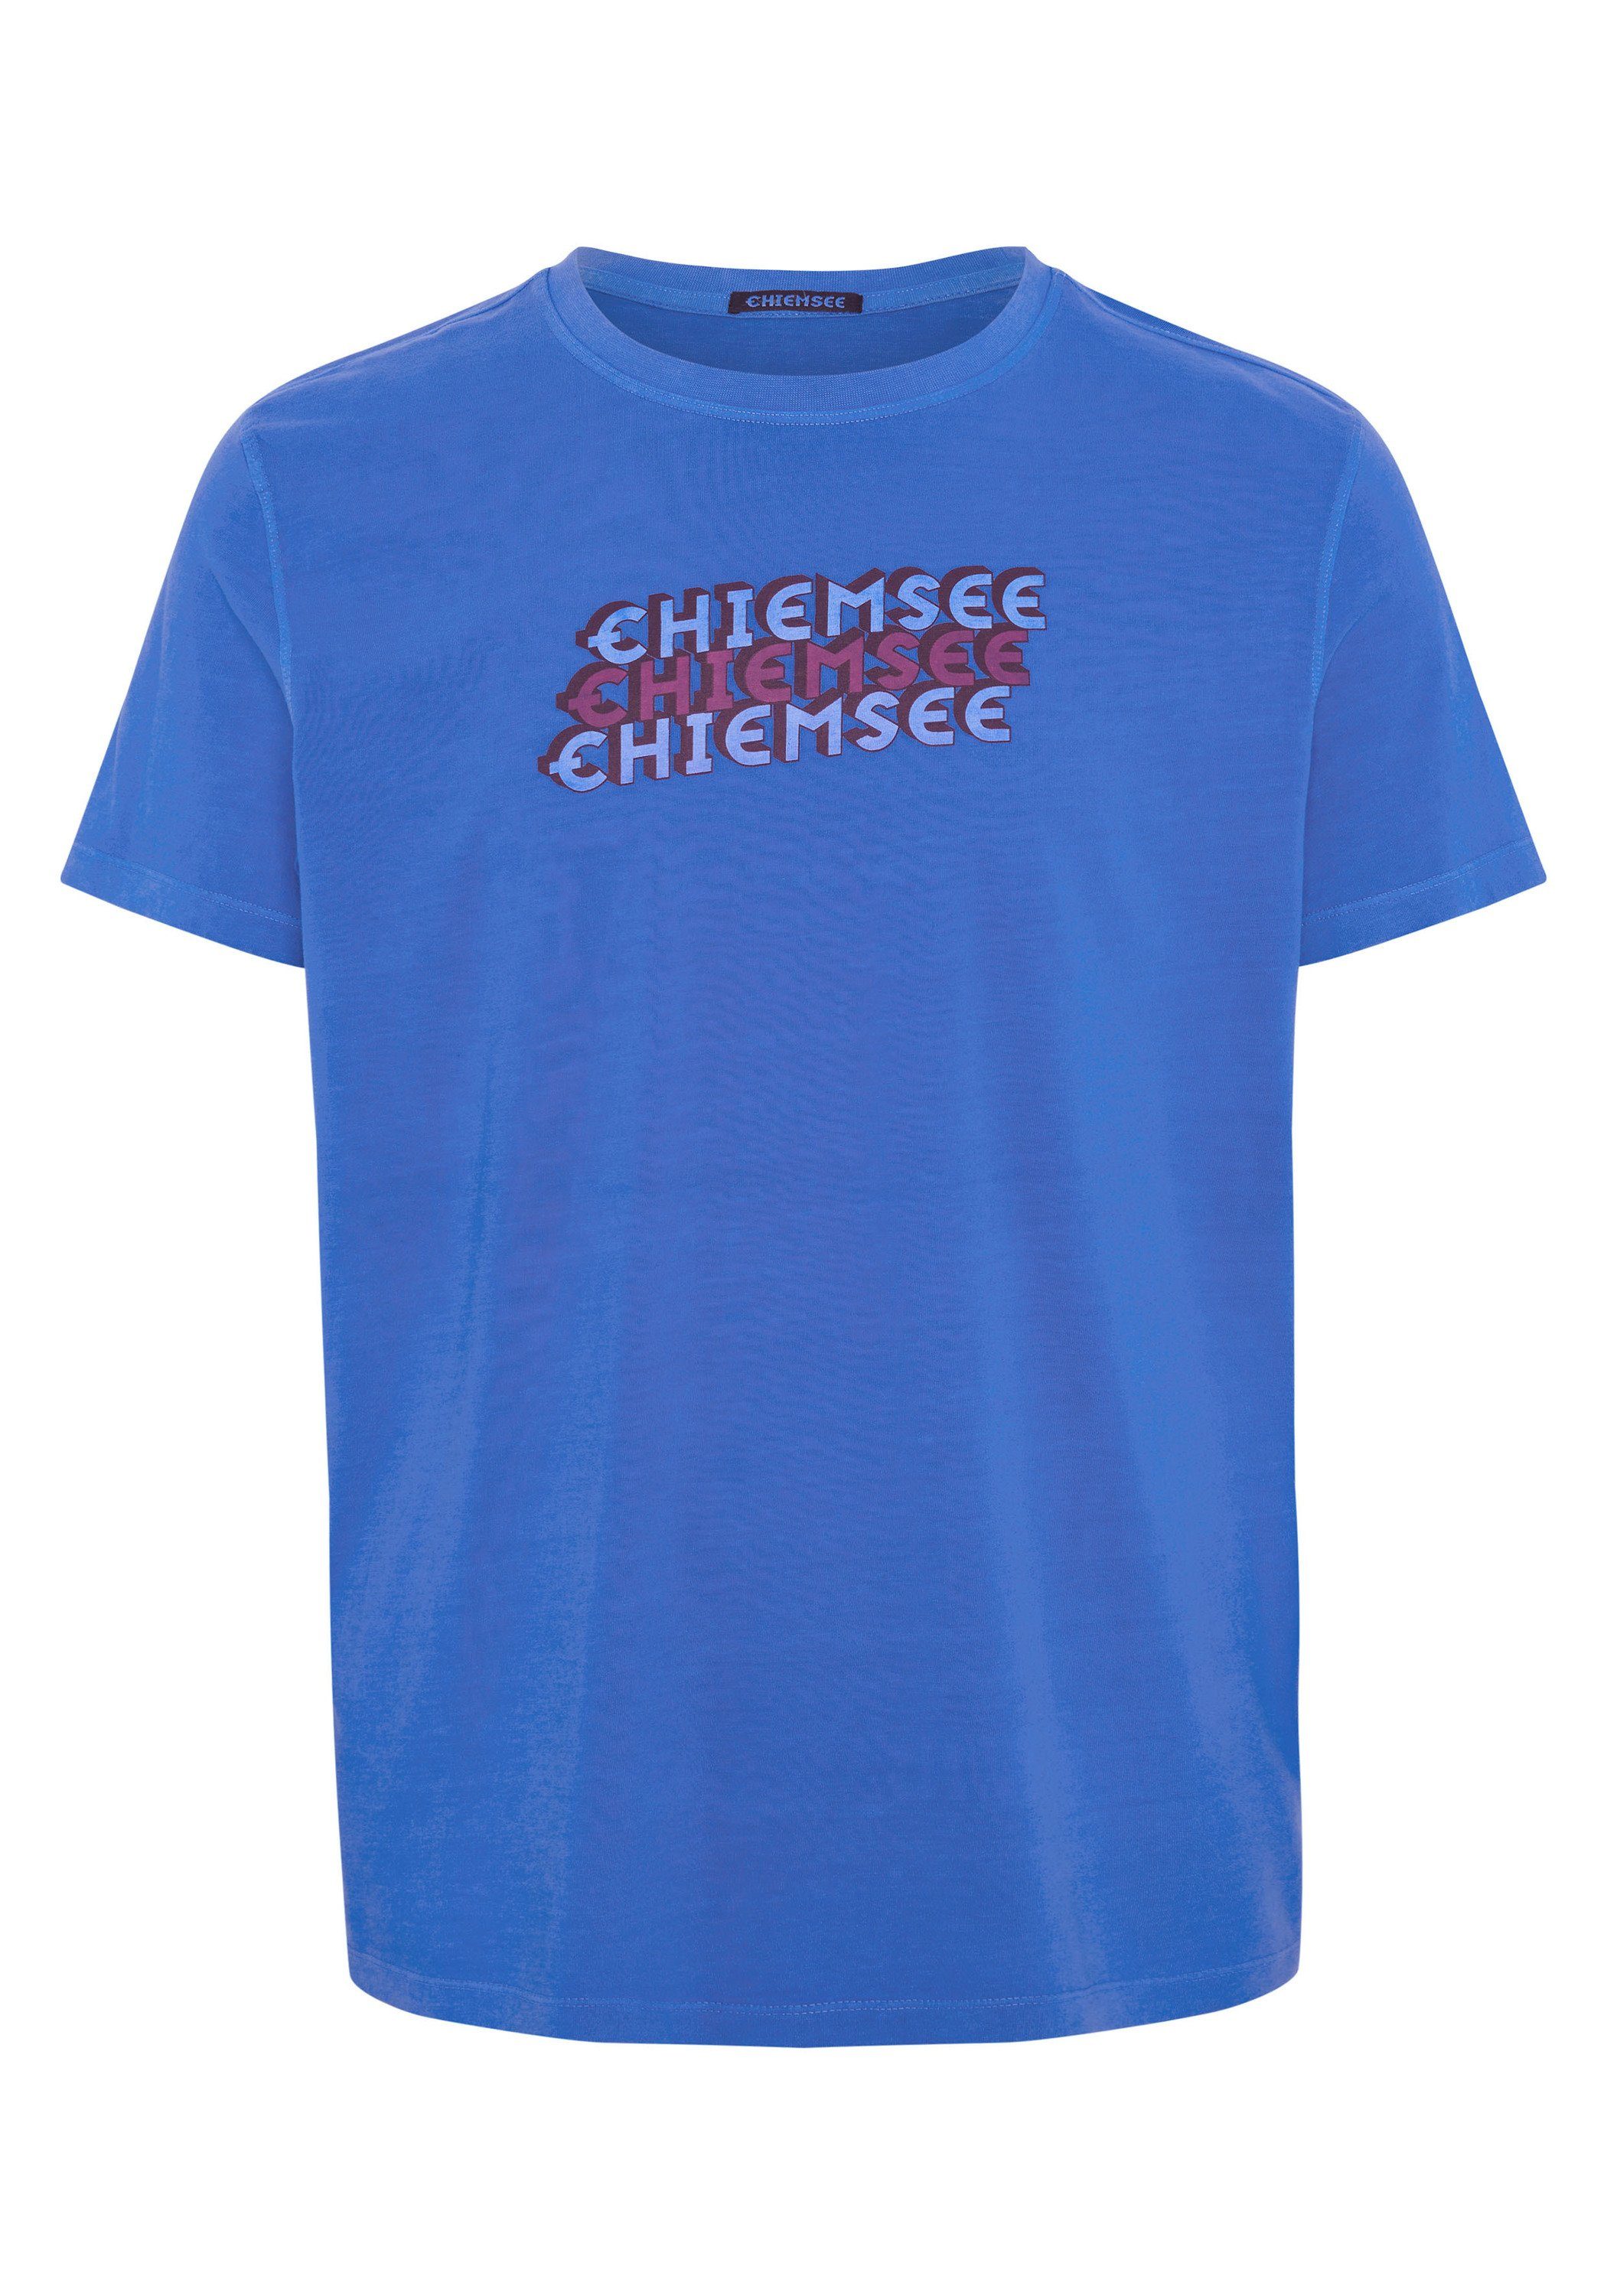 Baumwolljersey Label-Design 1, Print-Shirt CHIEMSEE Chiemsee Herren-Shirt aus im T-Shirt